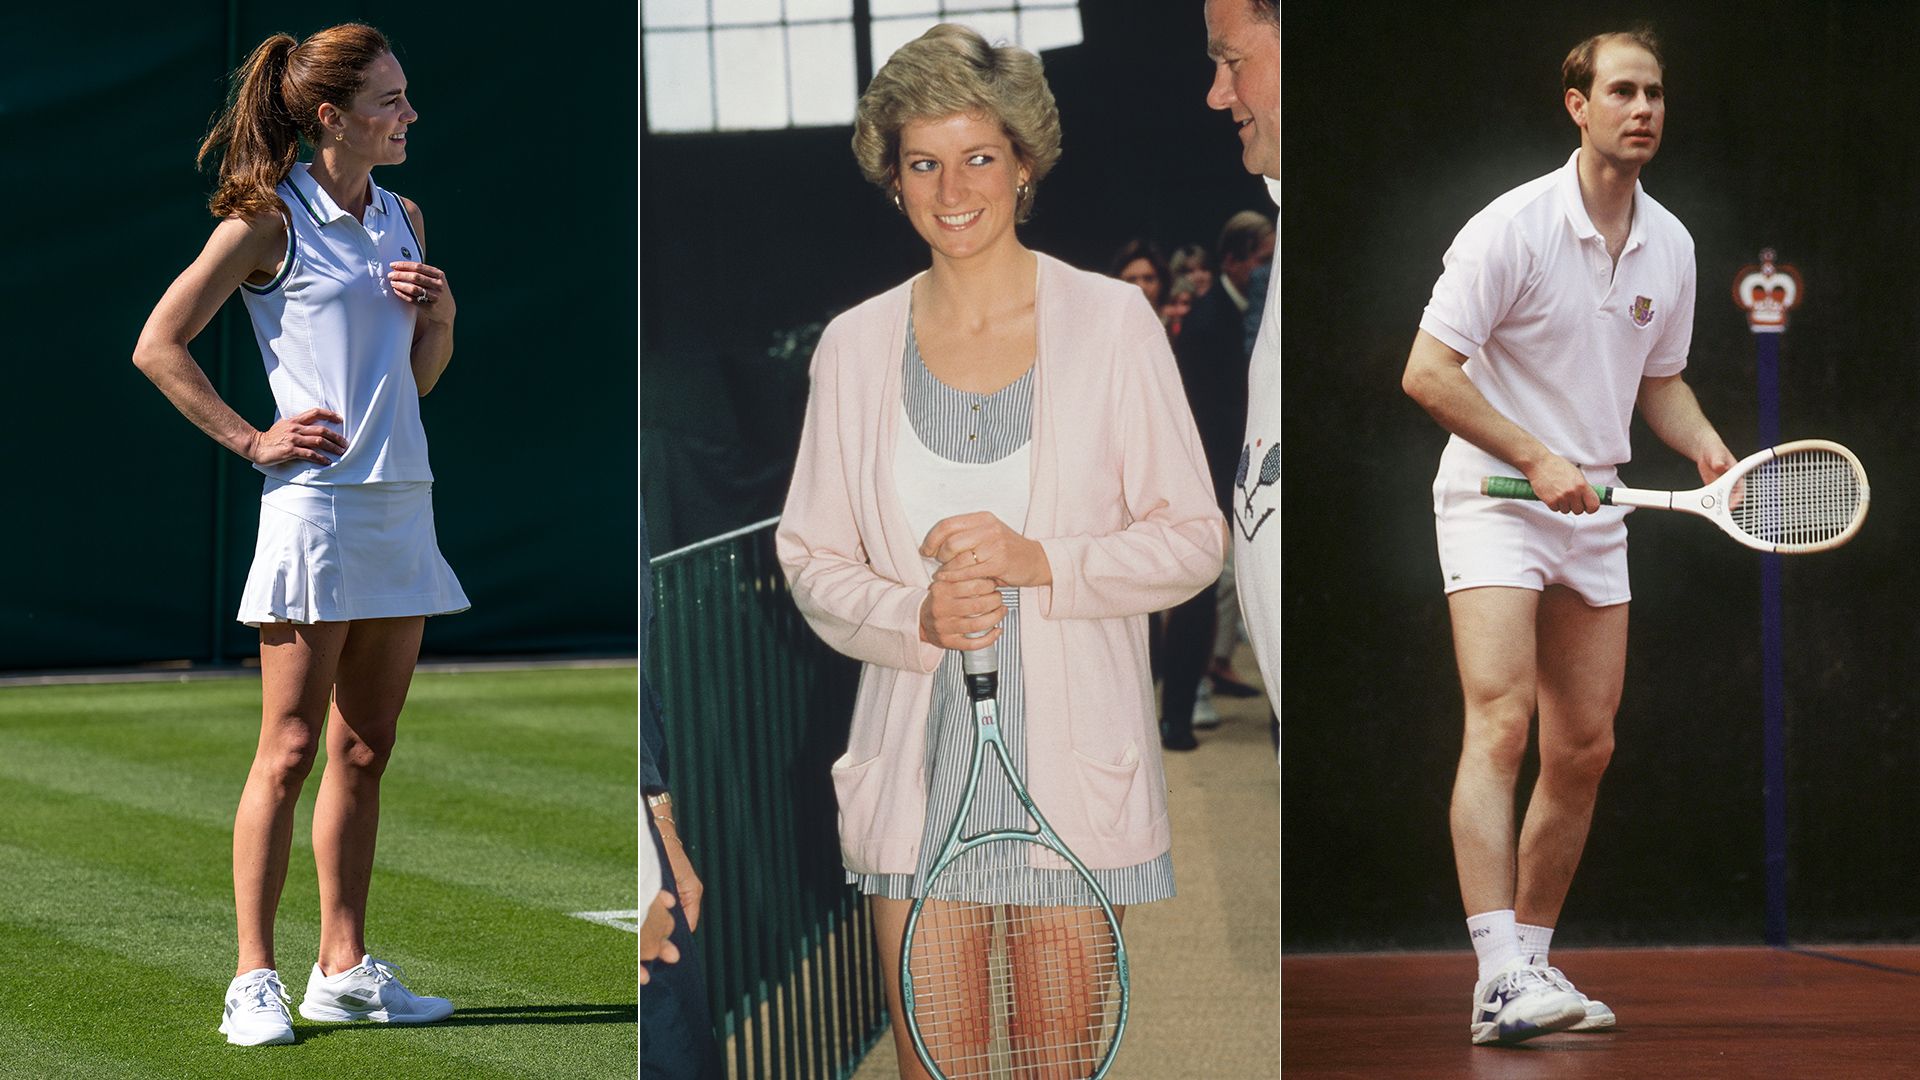 5 royals looking ace in tennis kit: Princess Kate, Princess Diana, Prince Edward and more